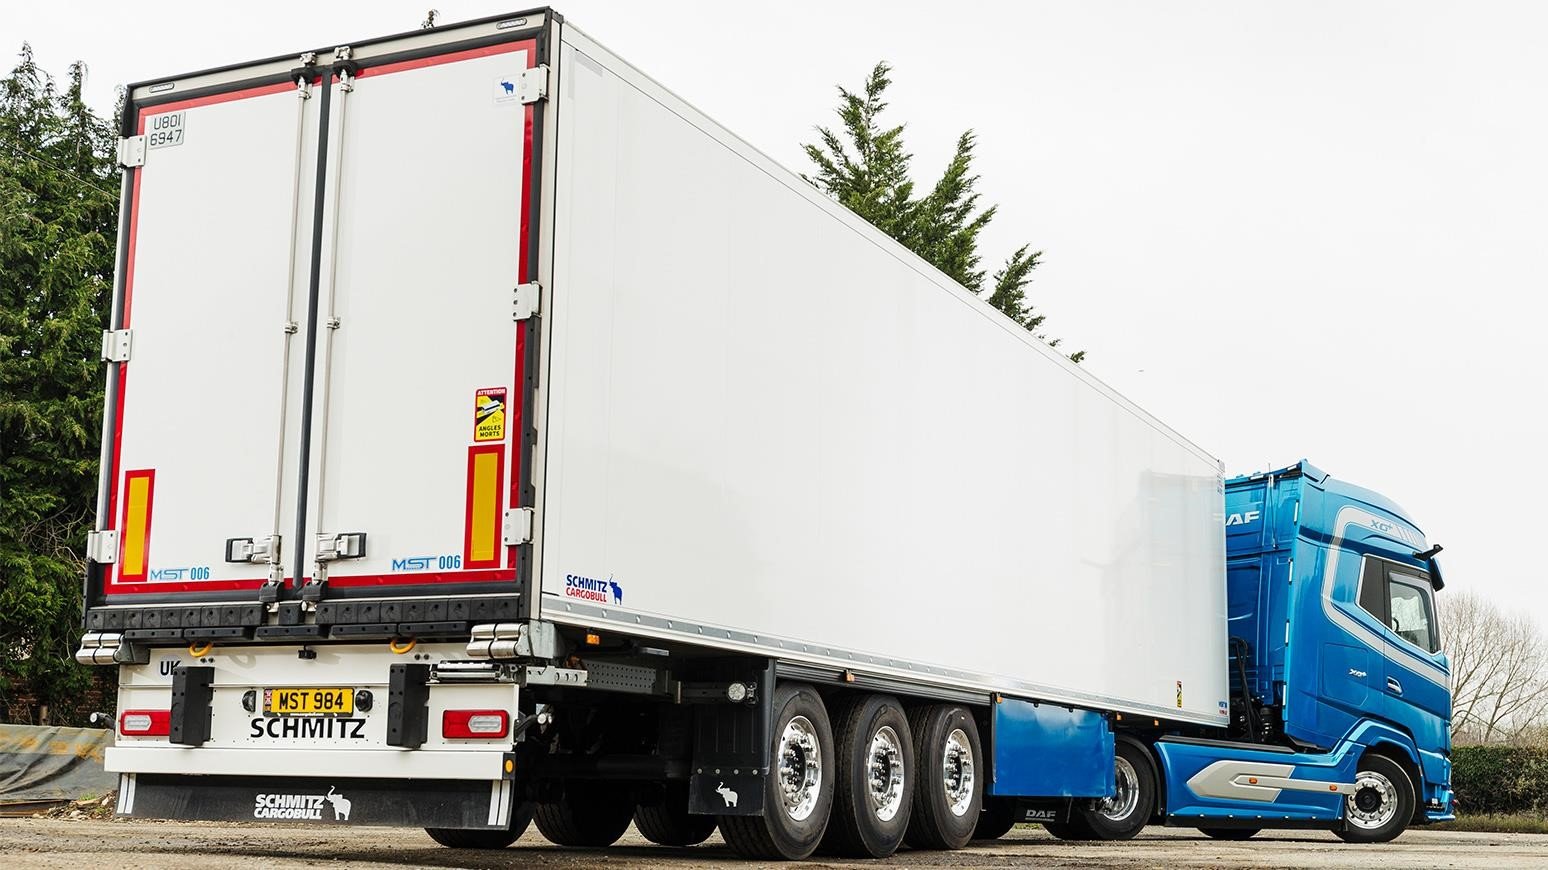 Mark Steward Transport Adds Fuel-Efficient Schmitz Cargobull Reefer Trailer For Grocery Deliveries